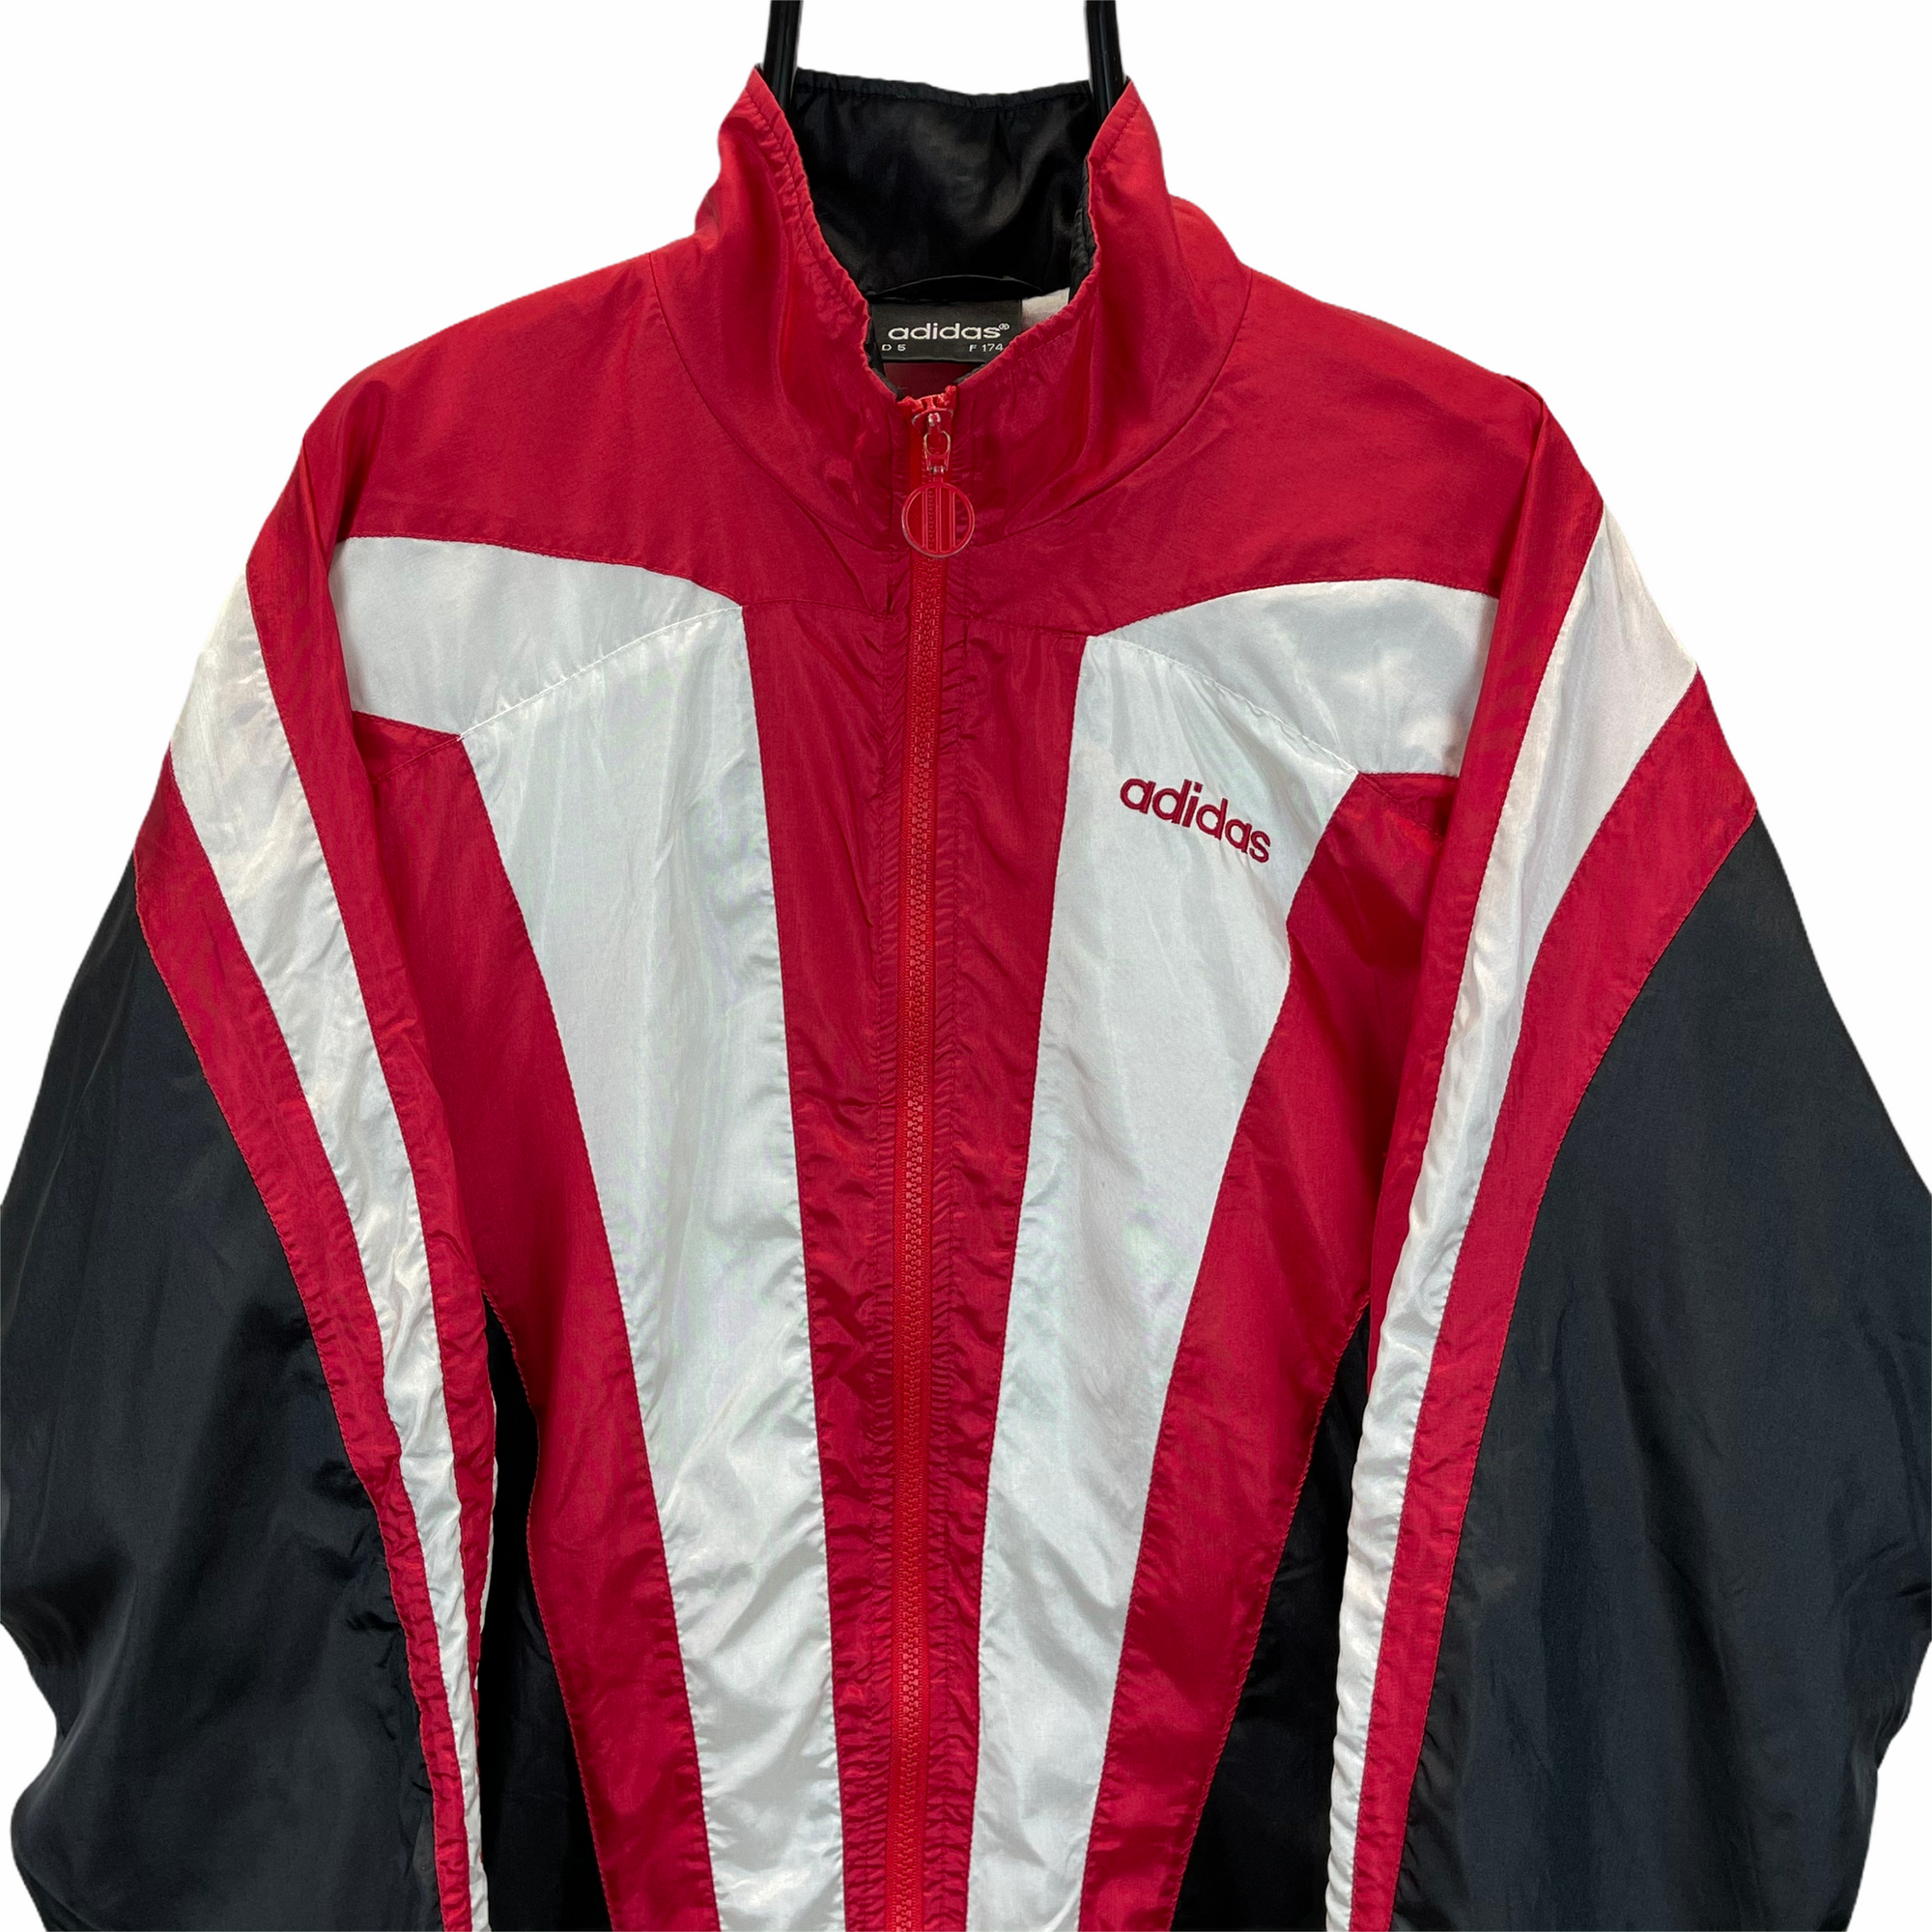 Vintage 80s Adidas Track Jacket in Red, White & Black - Men's Medium/Women's Large